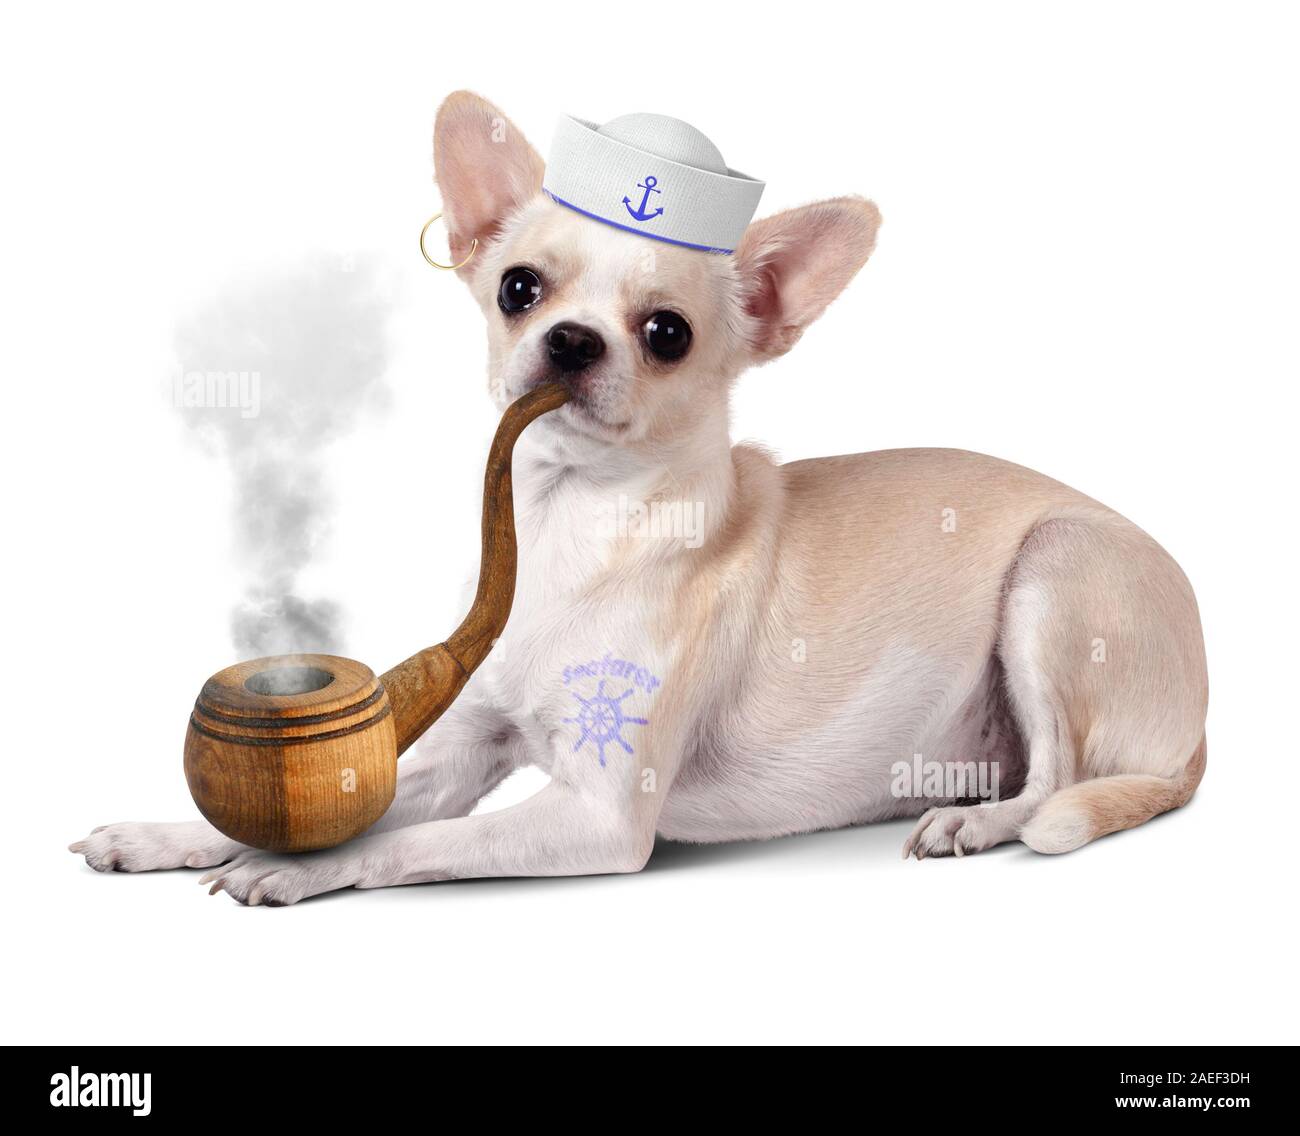 Funny animal marin, chien avec tuyau et mariner hat Banque D'Images